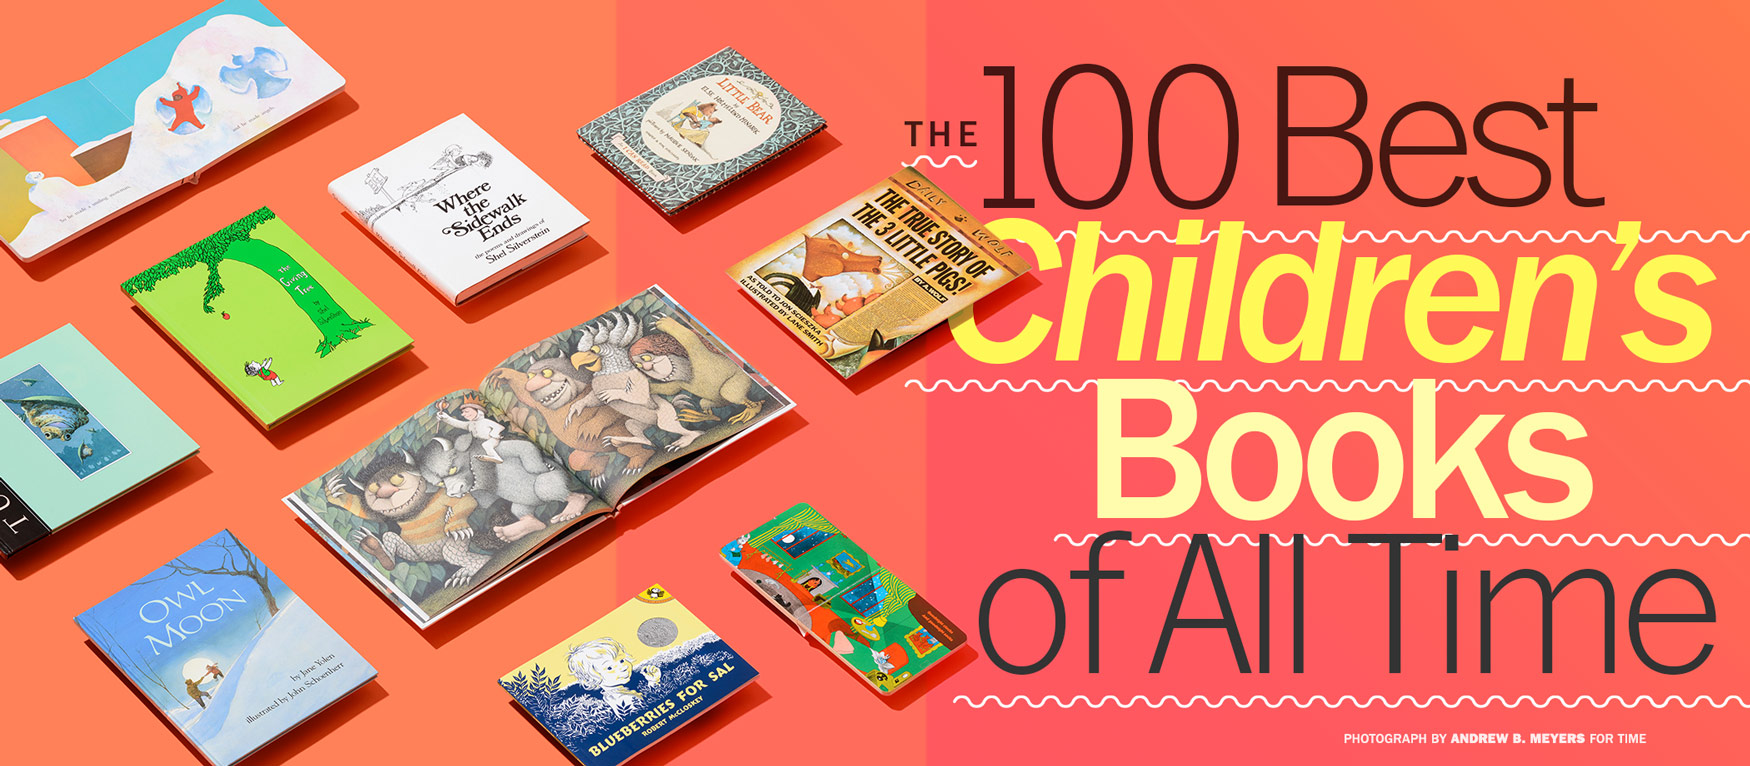 Melting leje Strengt The 100 Best Children's Books of All Time